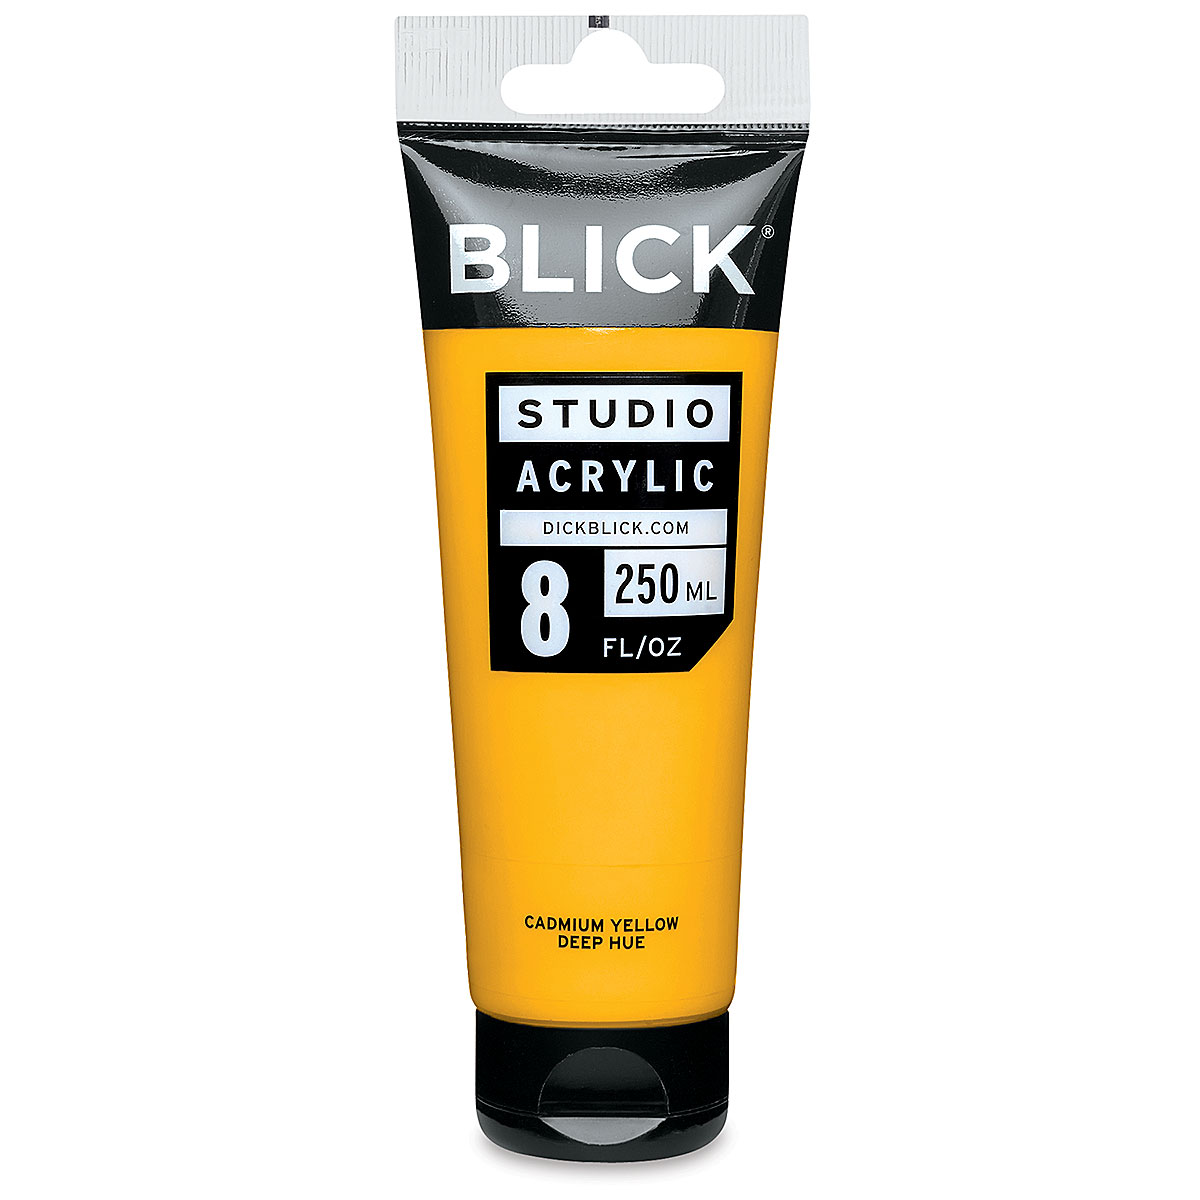 Blick Studio Acrylics - Mars Black, 4 oz Tube